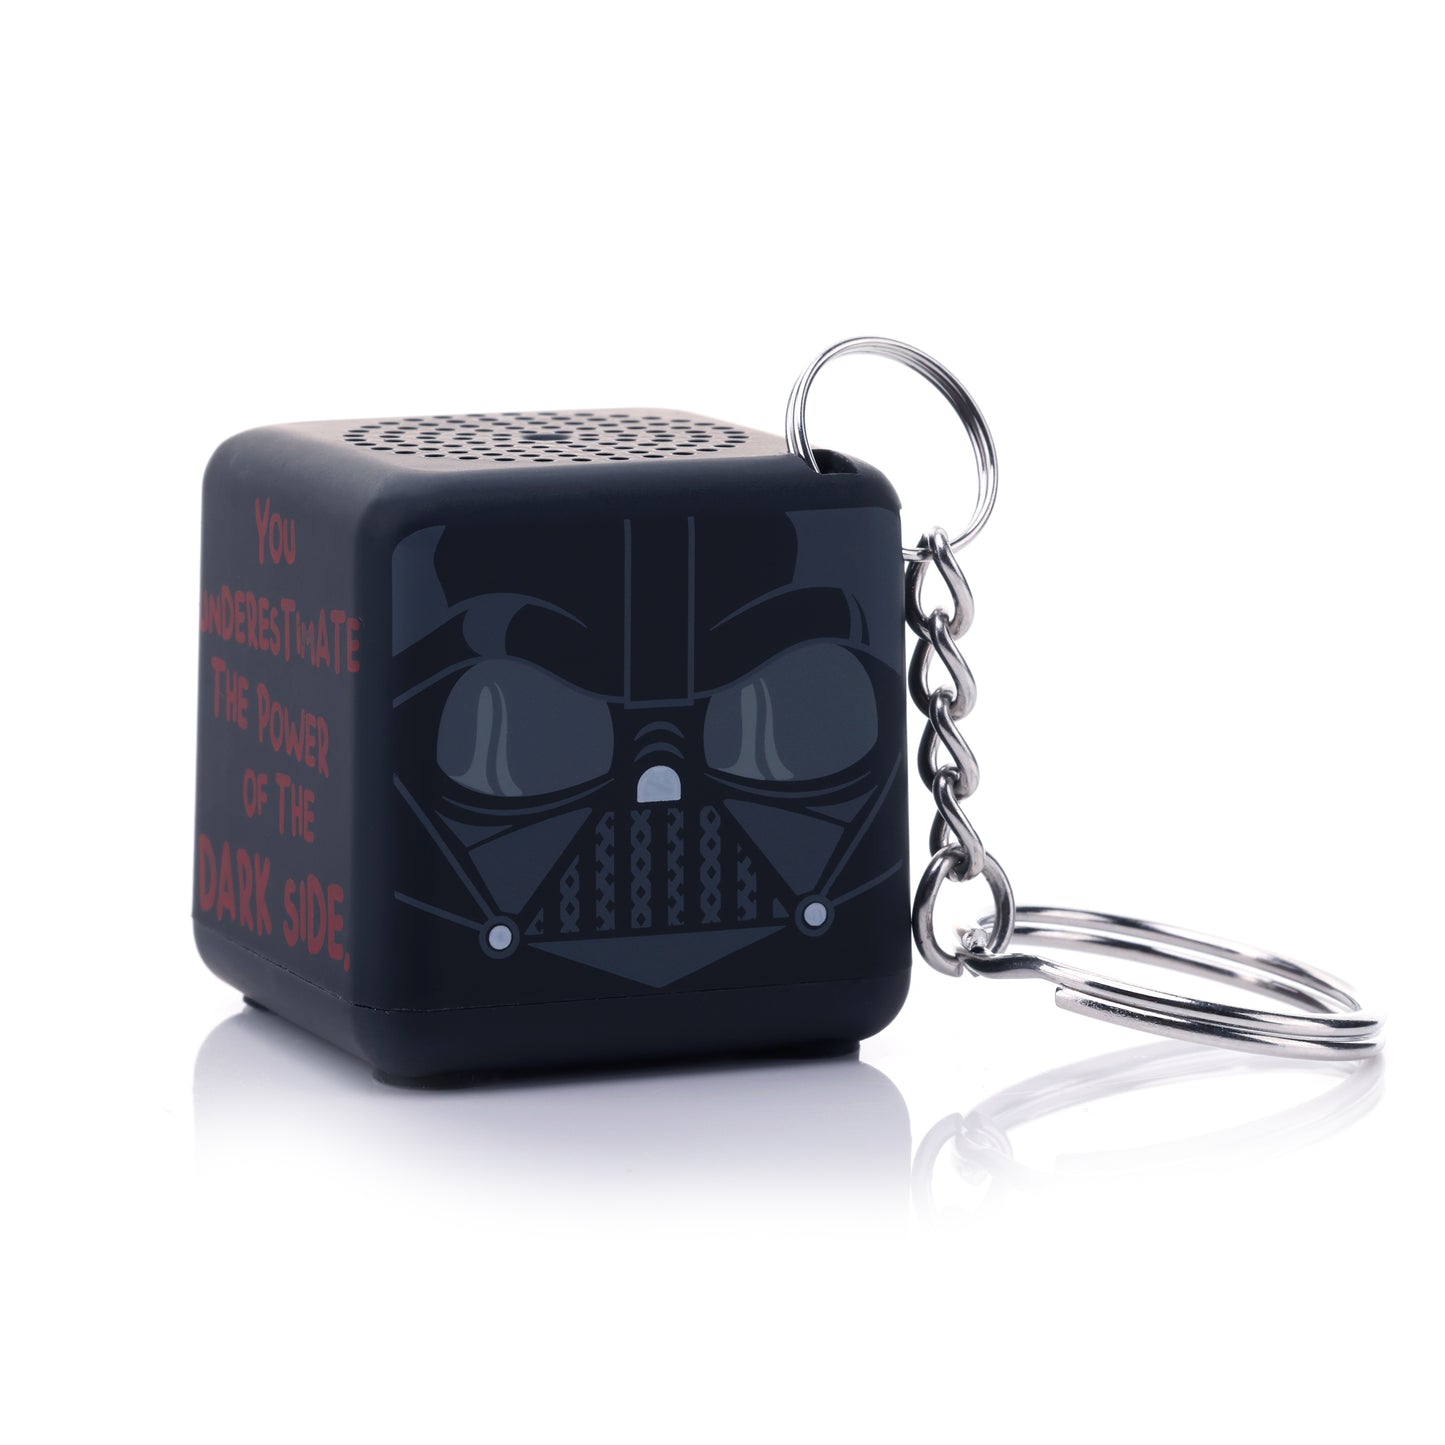 Darth Vader Bitty Box